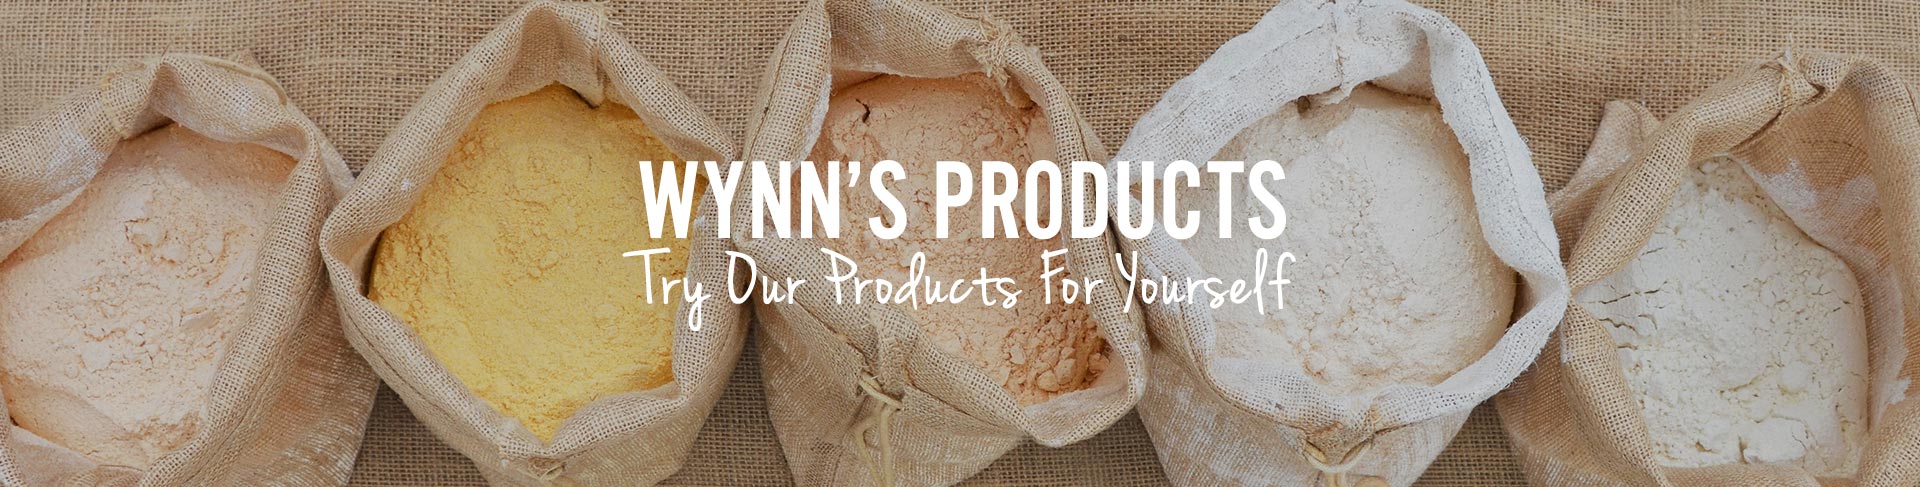 Wynn's Grain and Spice